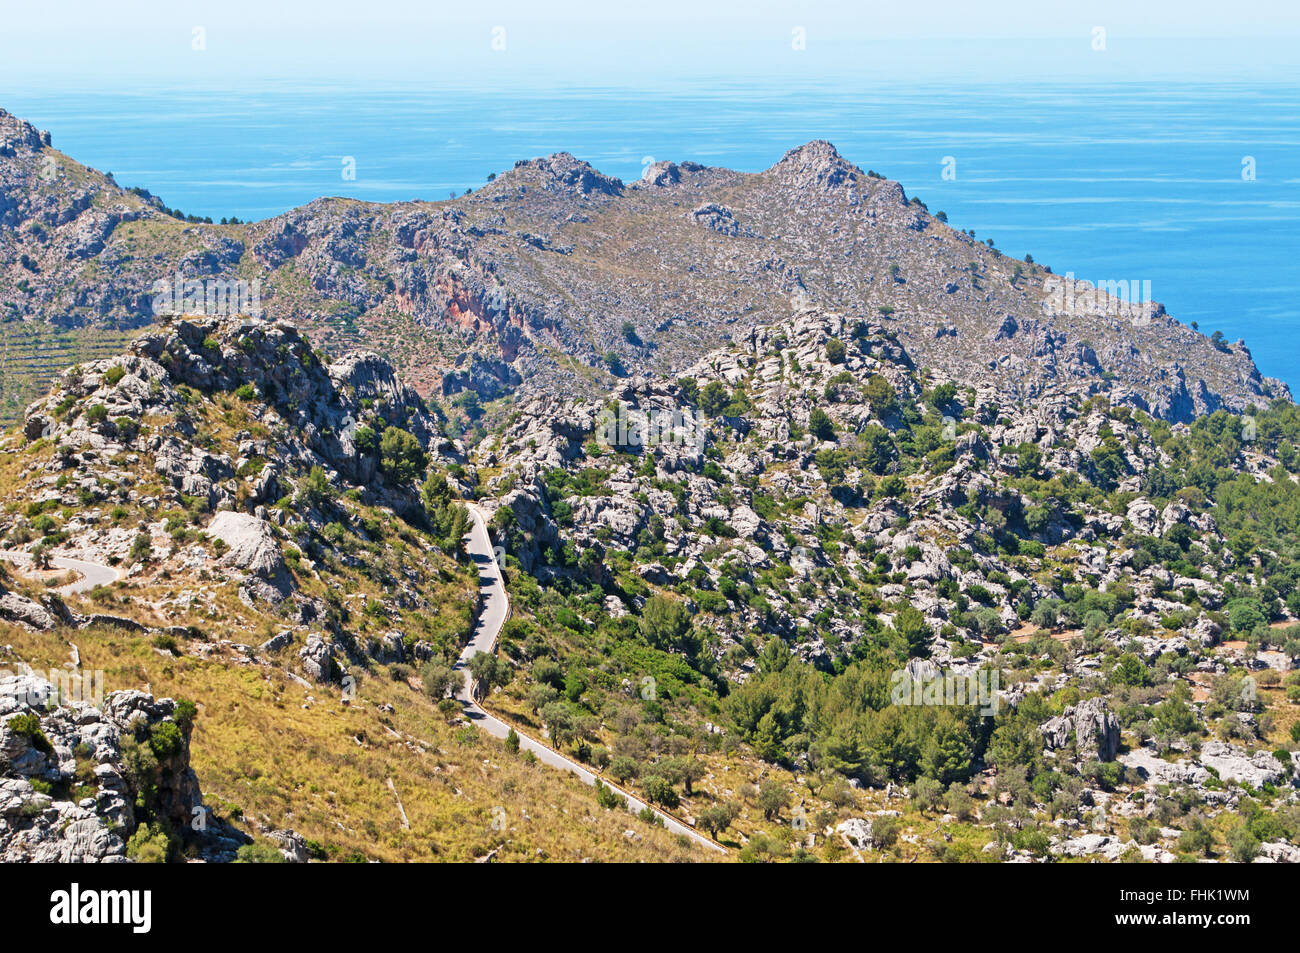 Mallorca, Balearic Islands, Spain: the winding road leading in Cala Tuent, a remote beach at the foot of the Serra de Tramuntana mountain range Stock Photo